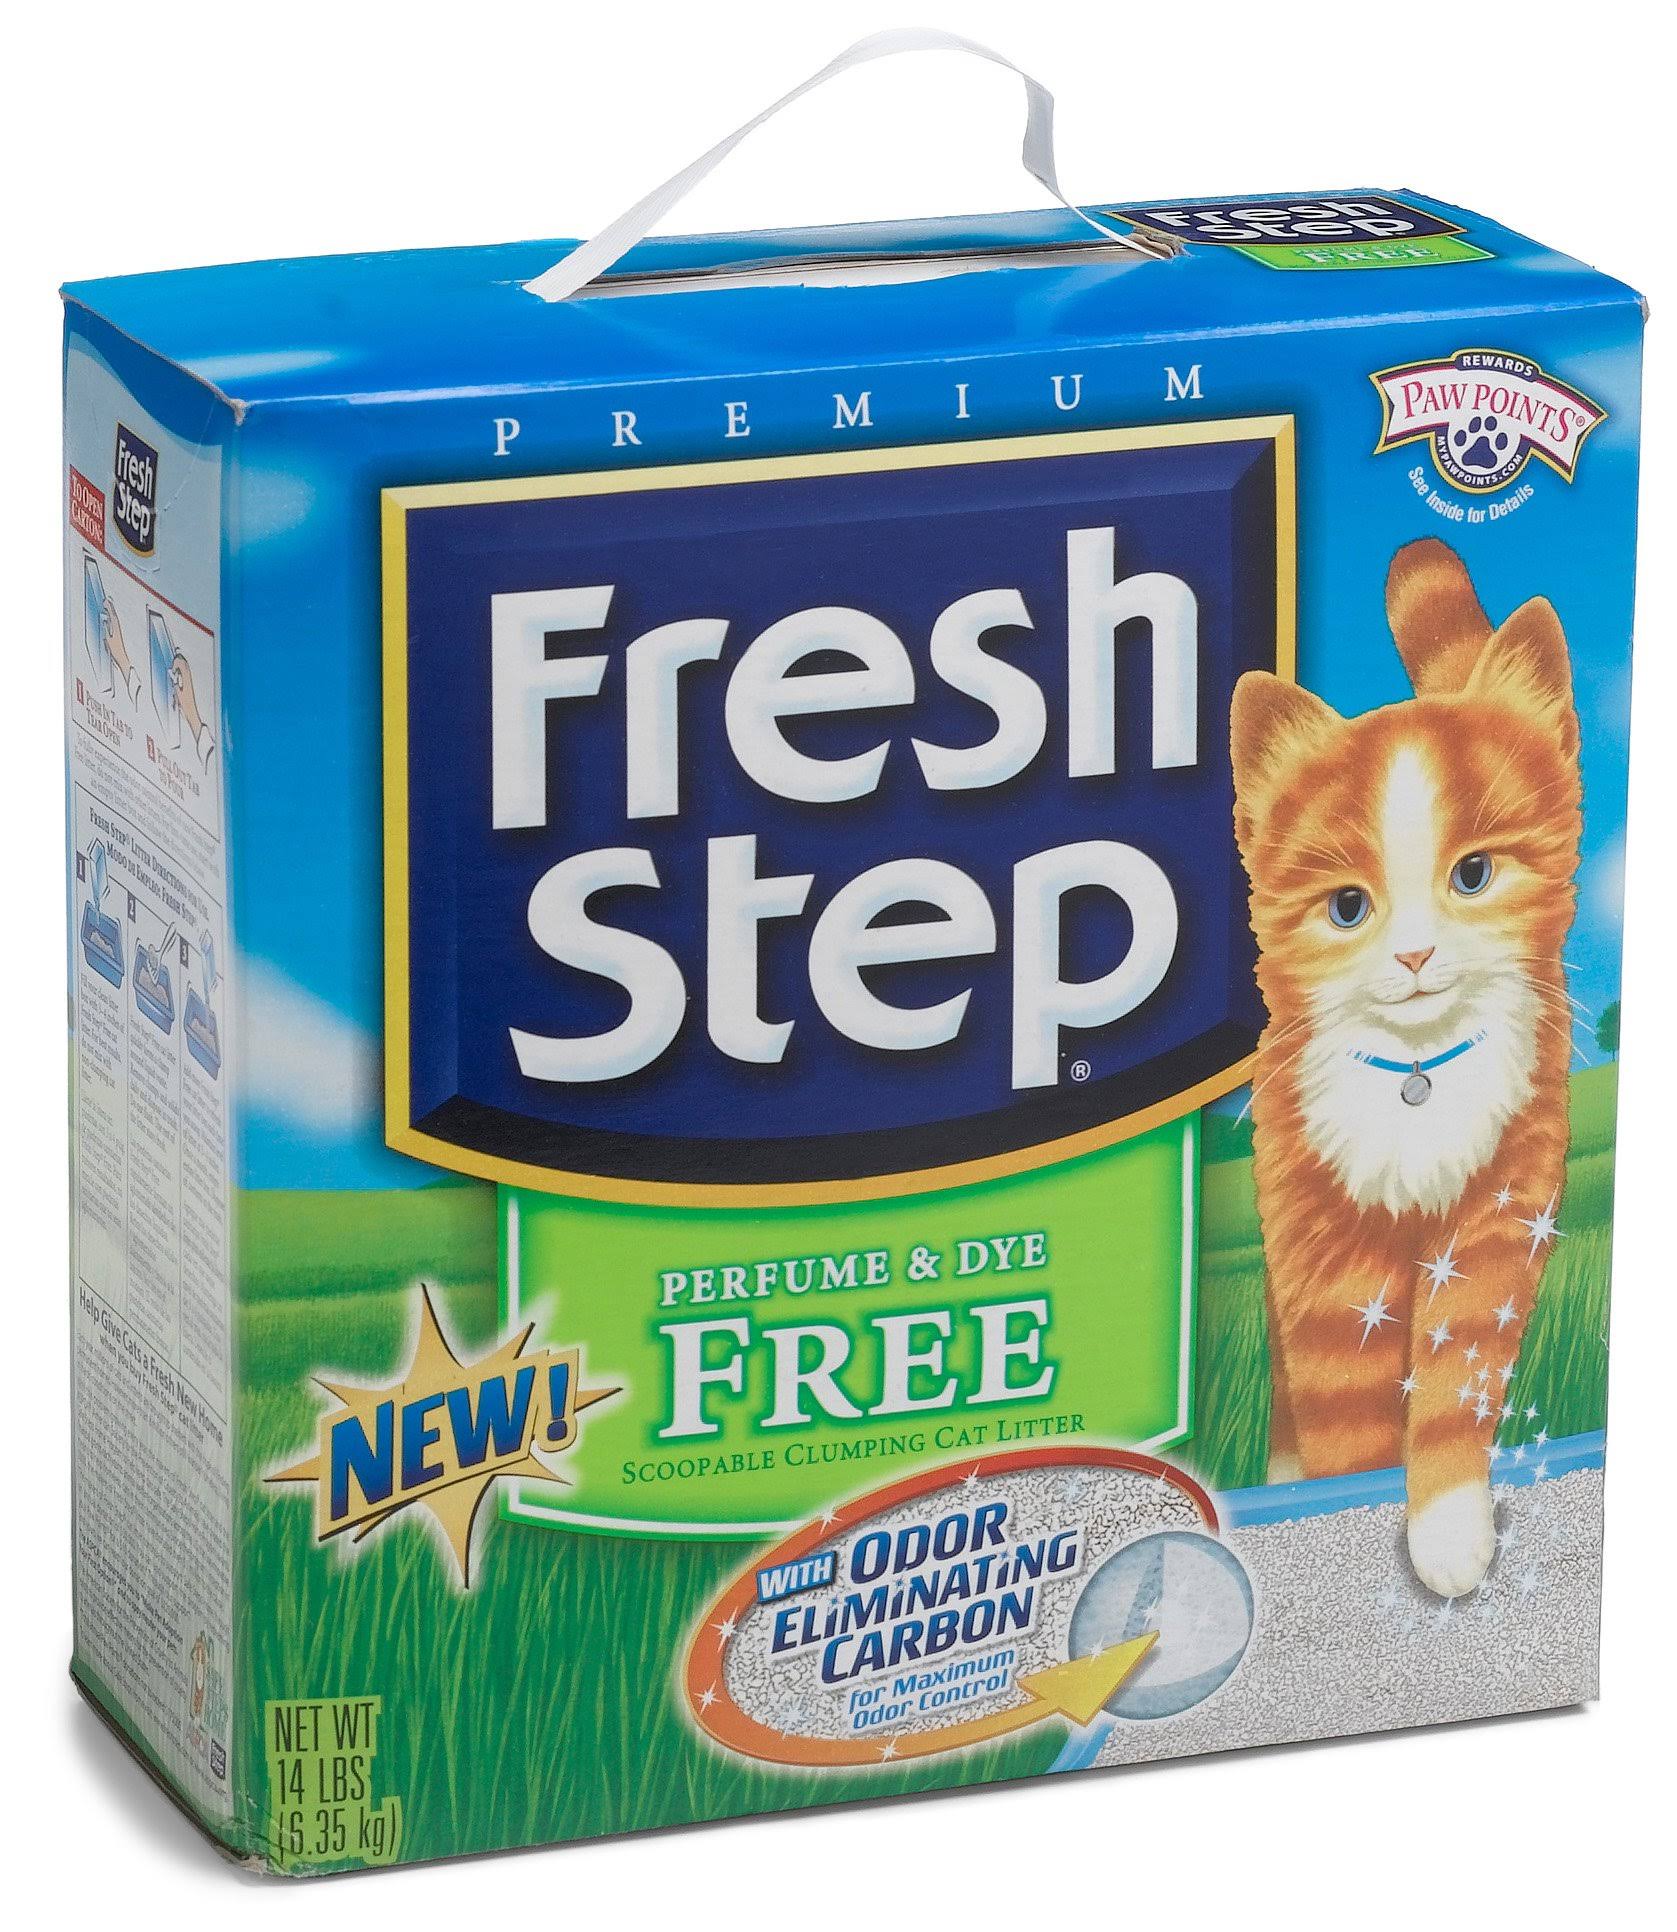 Fresh Step Multi Step Kitty Litter - Perfume and Dye Free, 14lb